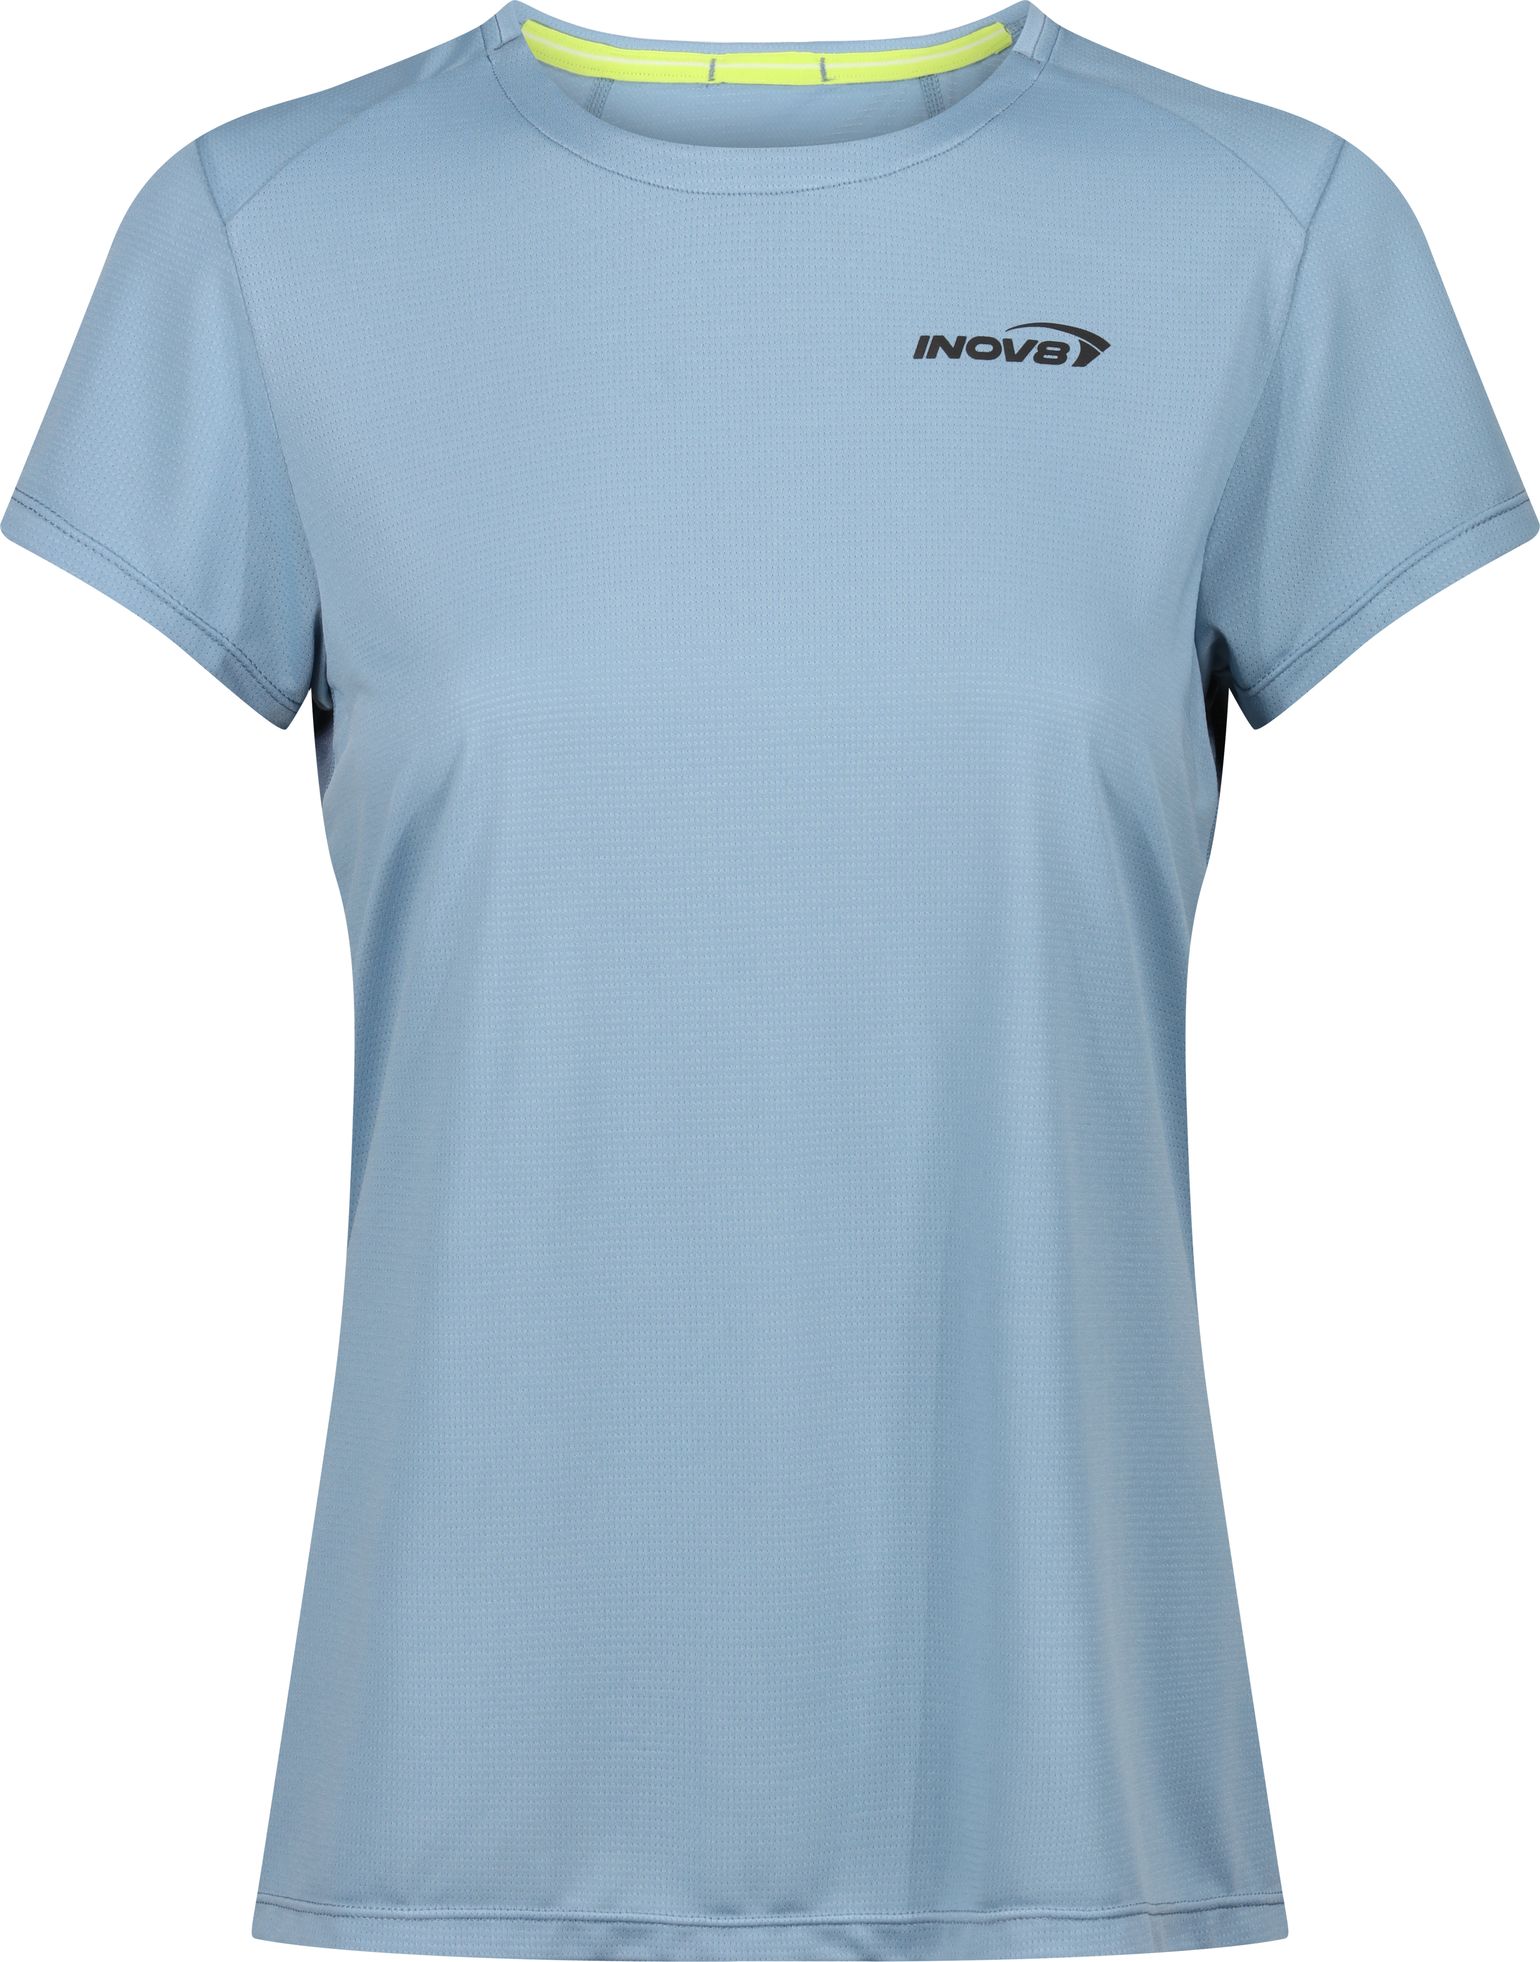 inov-8 Women's Performance Short Sleeve T-Shirt Blue Grey / Slate